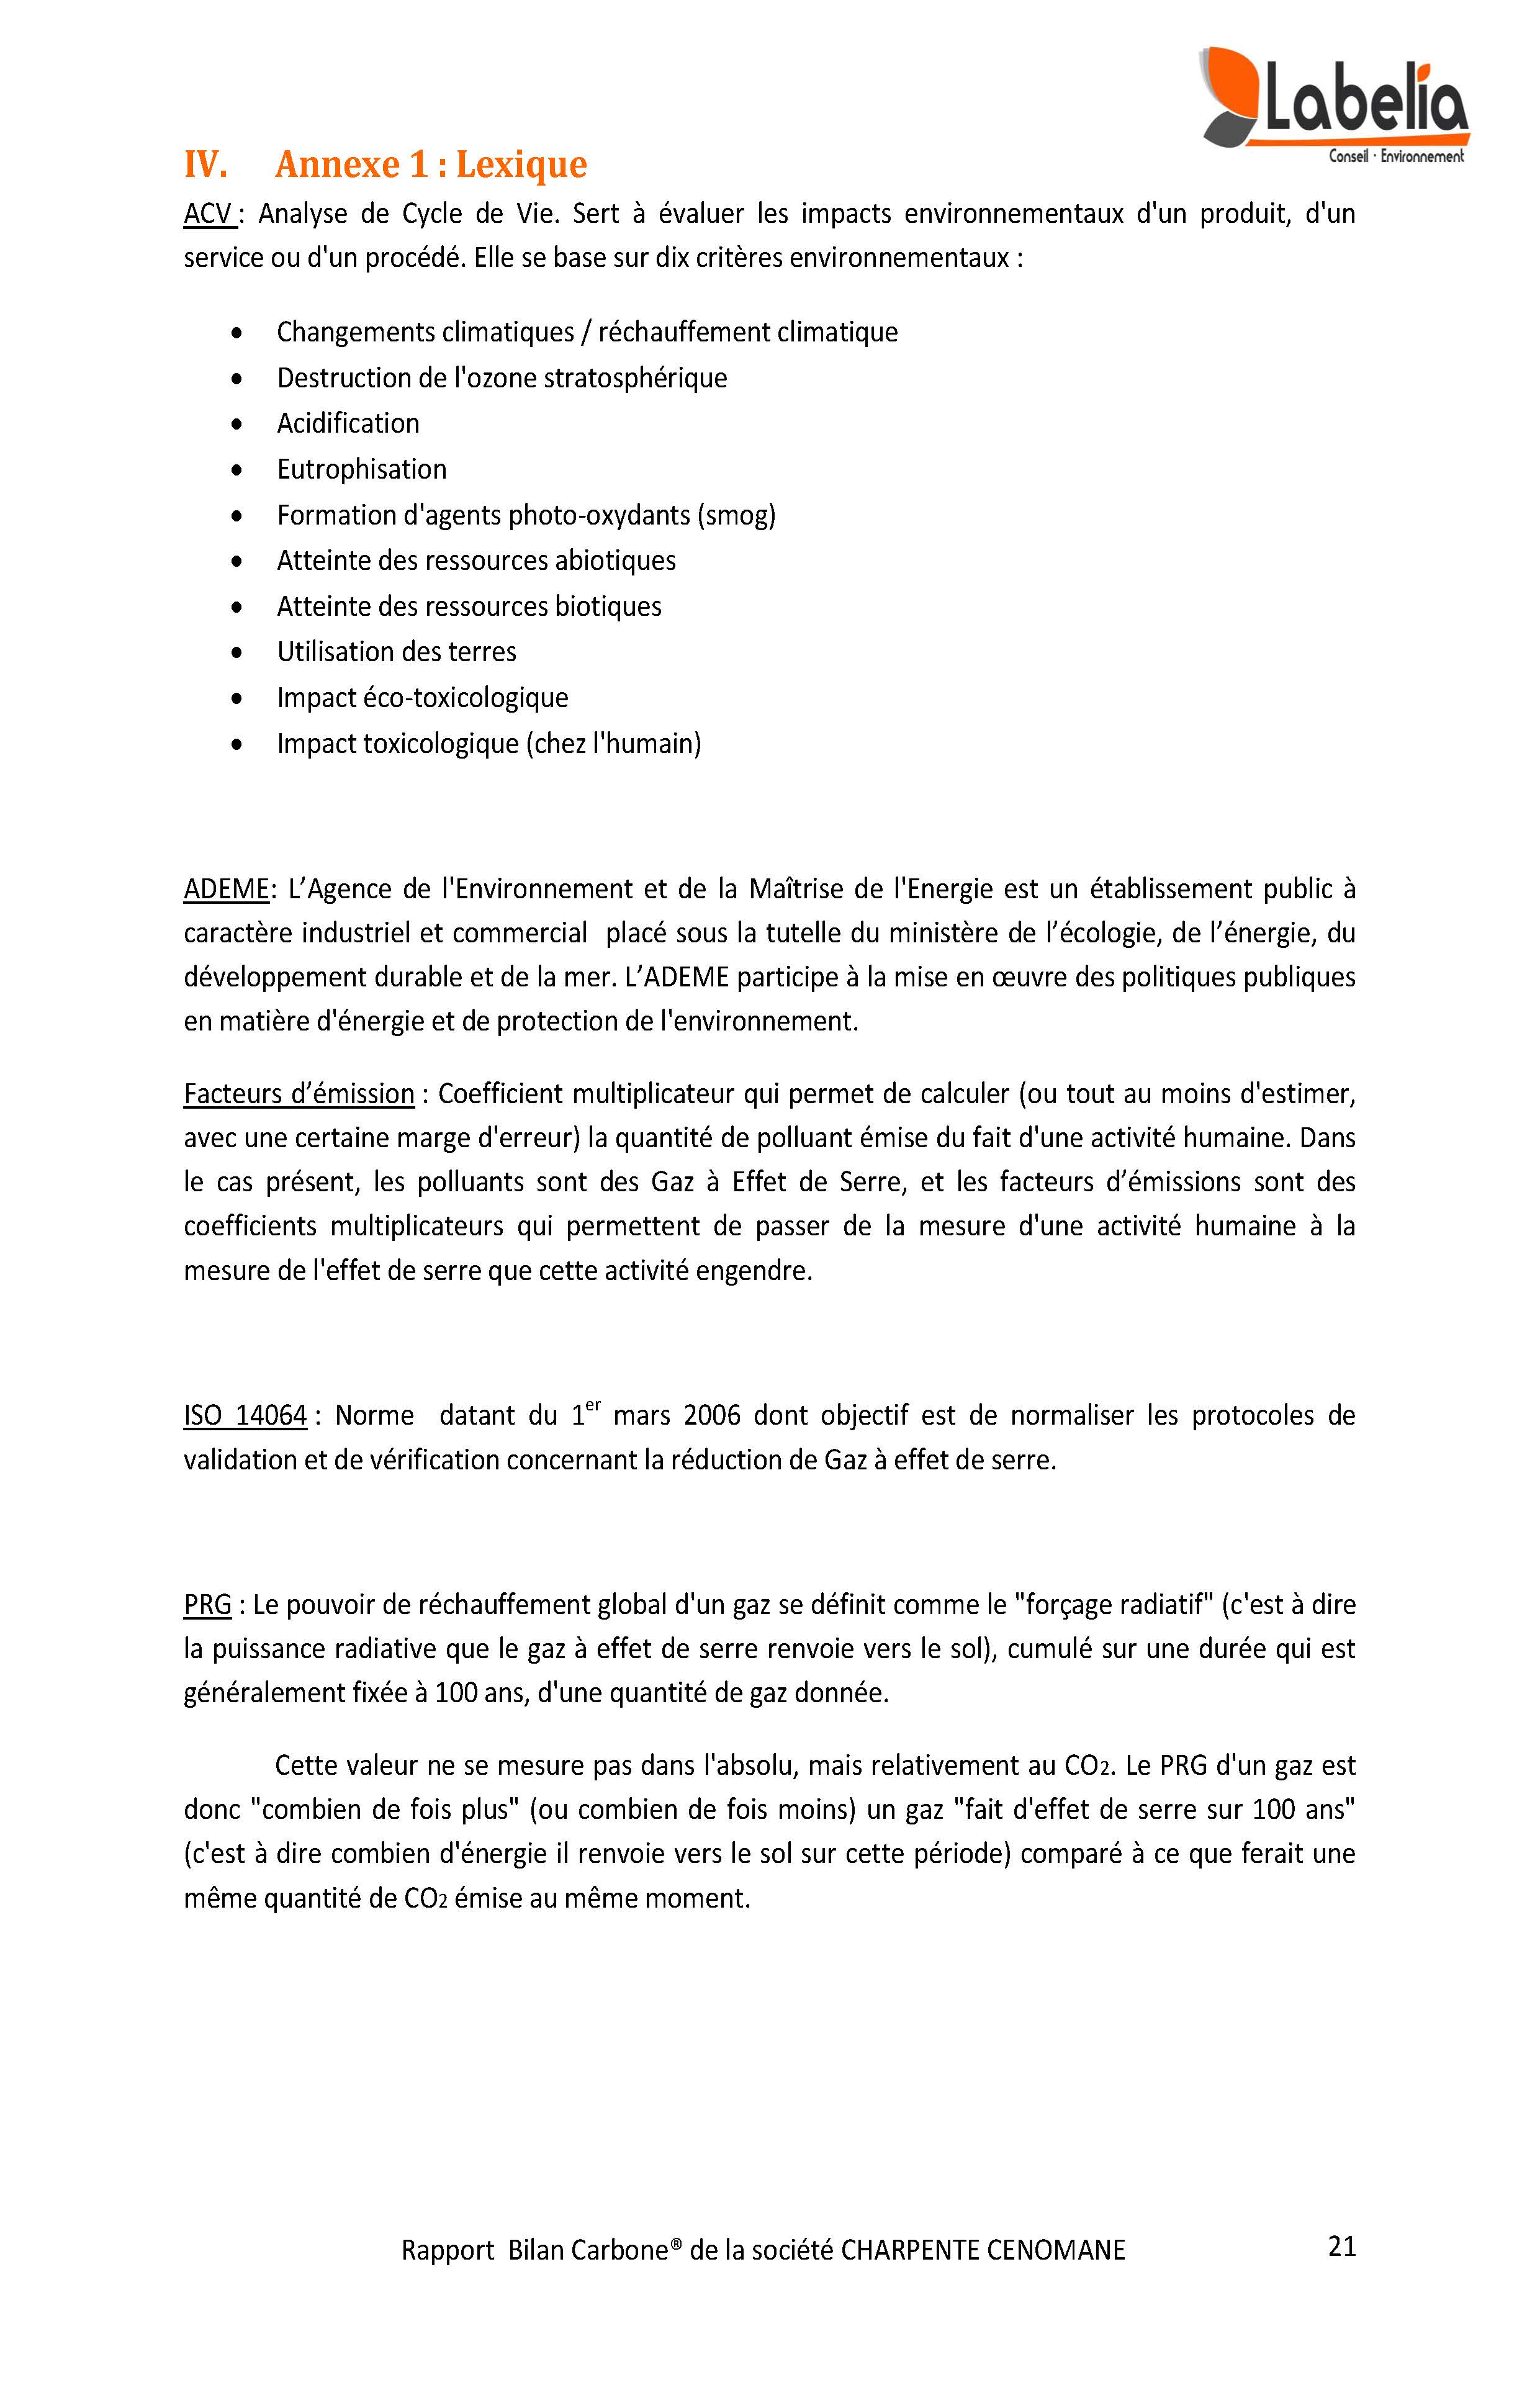 Rapport Bilan Carbone 2013 Page 21